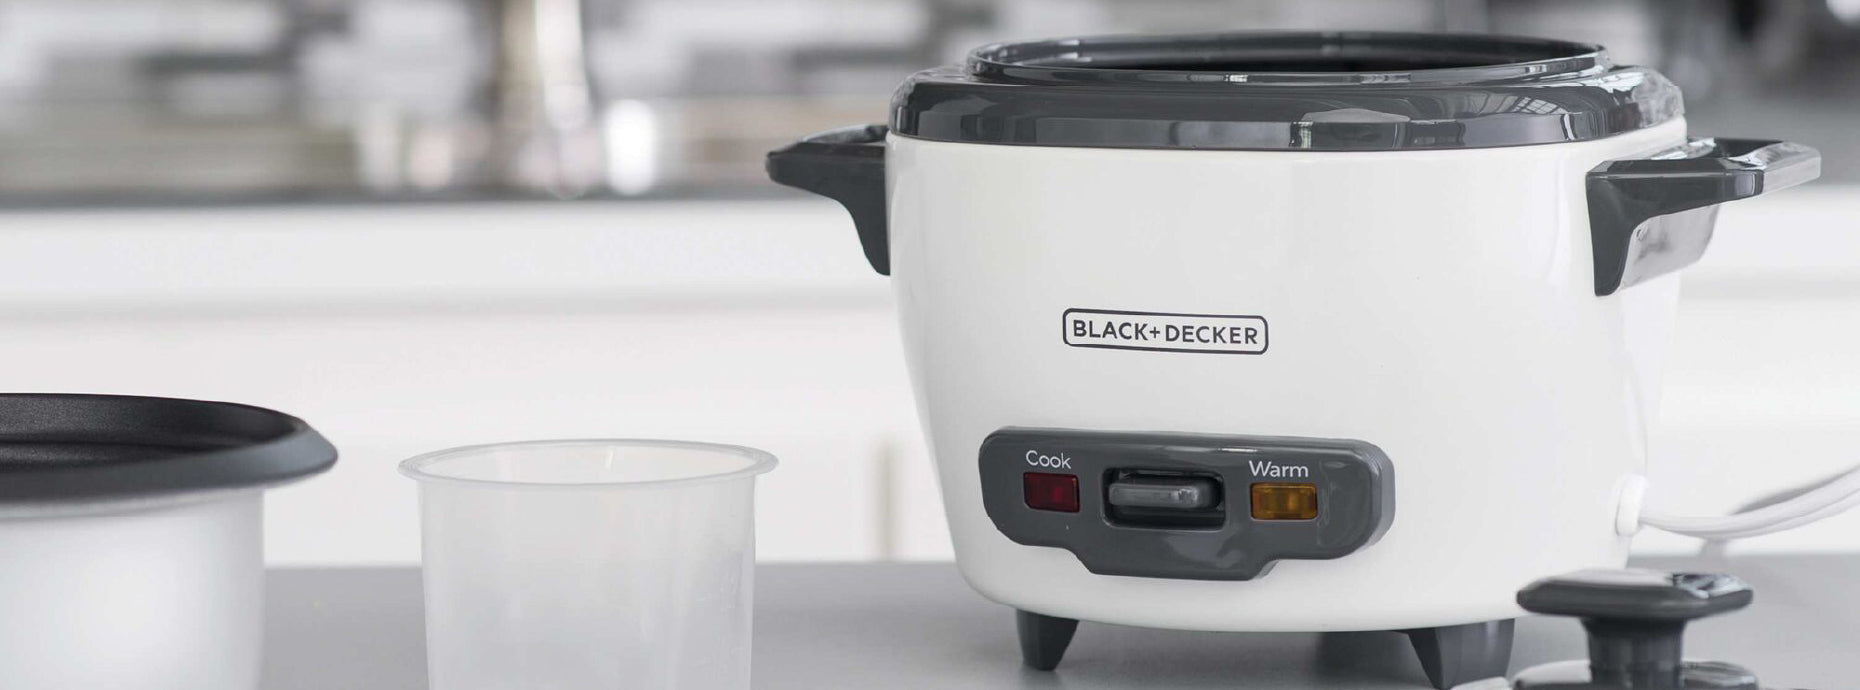 BLACK+DECKER Black & Decker 12-Cup Rice Cooker, Silver